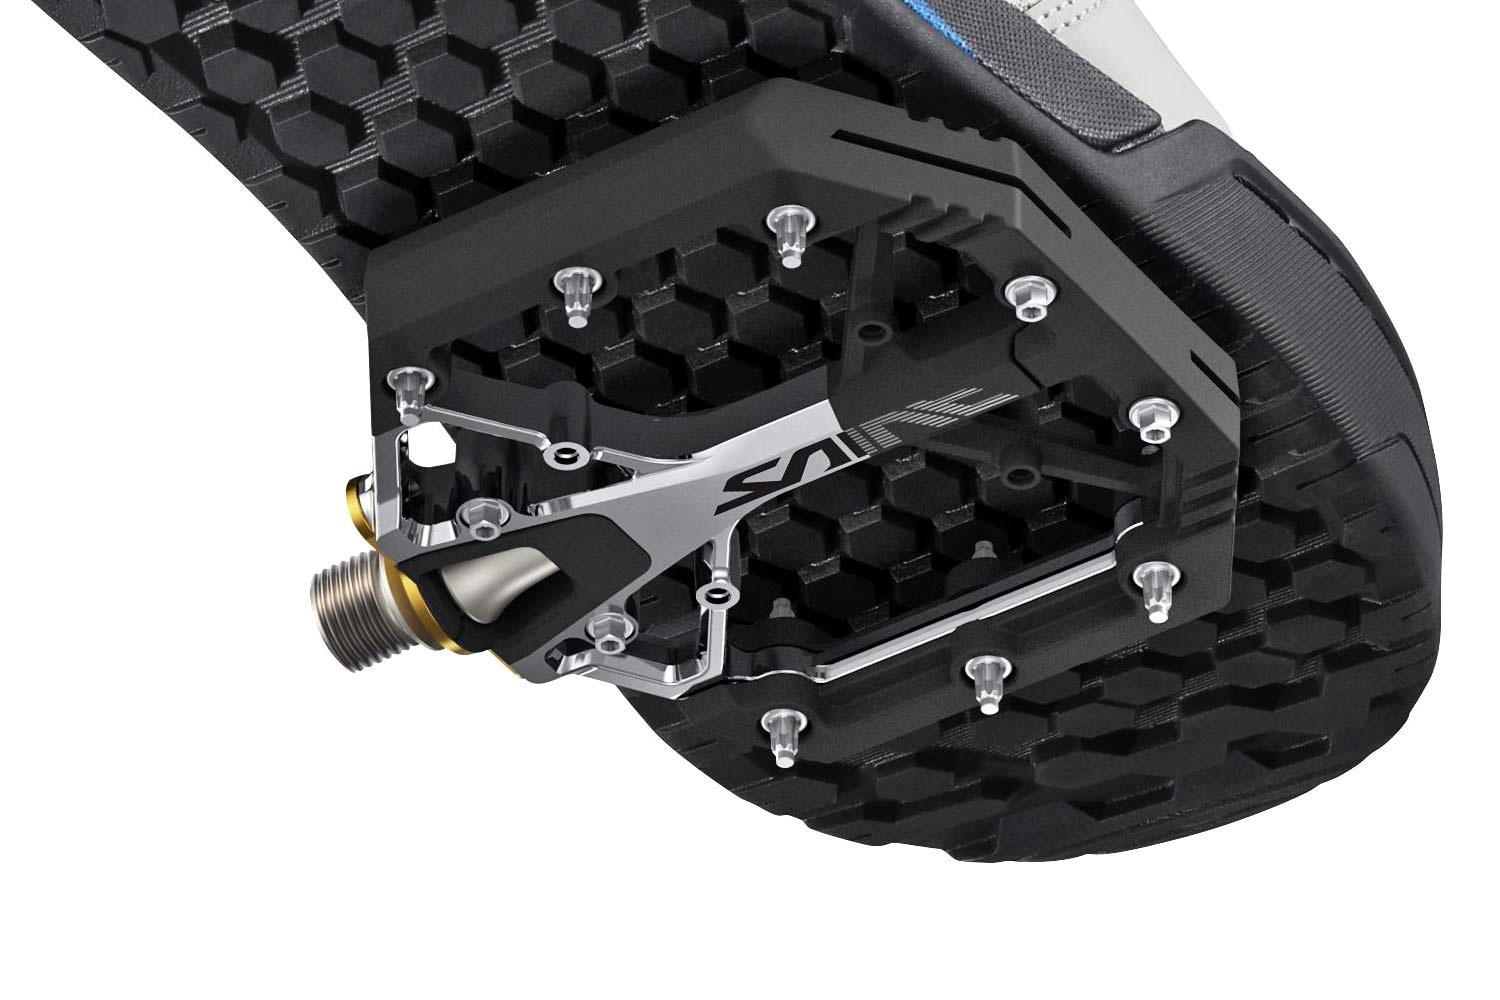 Apoyarse Infrarrojo atlántico All-new, much lighter Shimano XT & Saint platform pedals! - Bikerumor